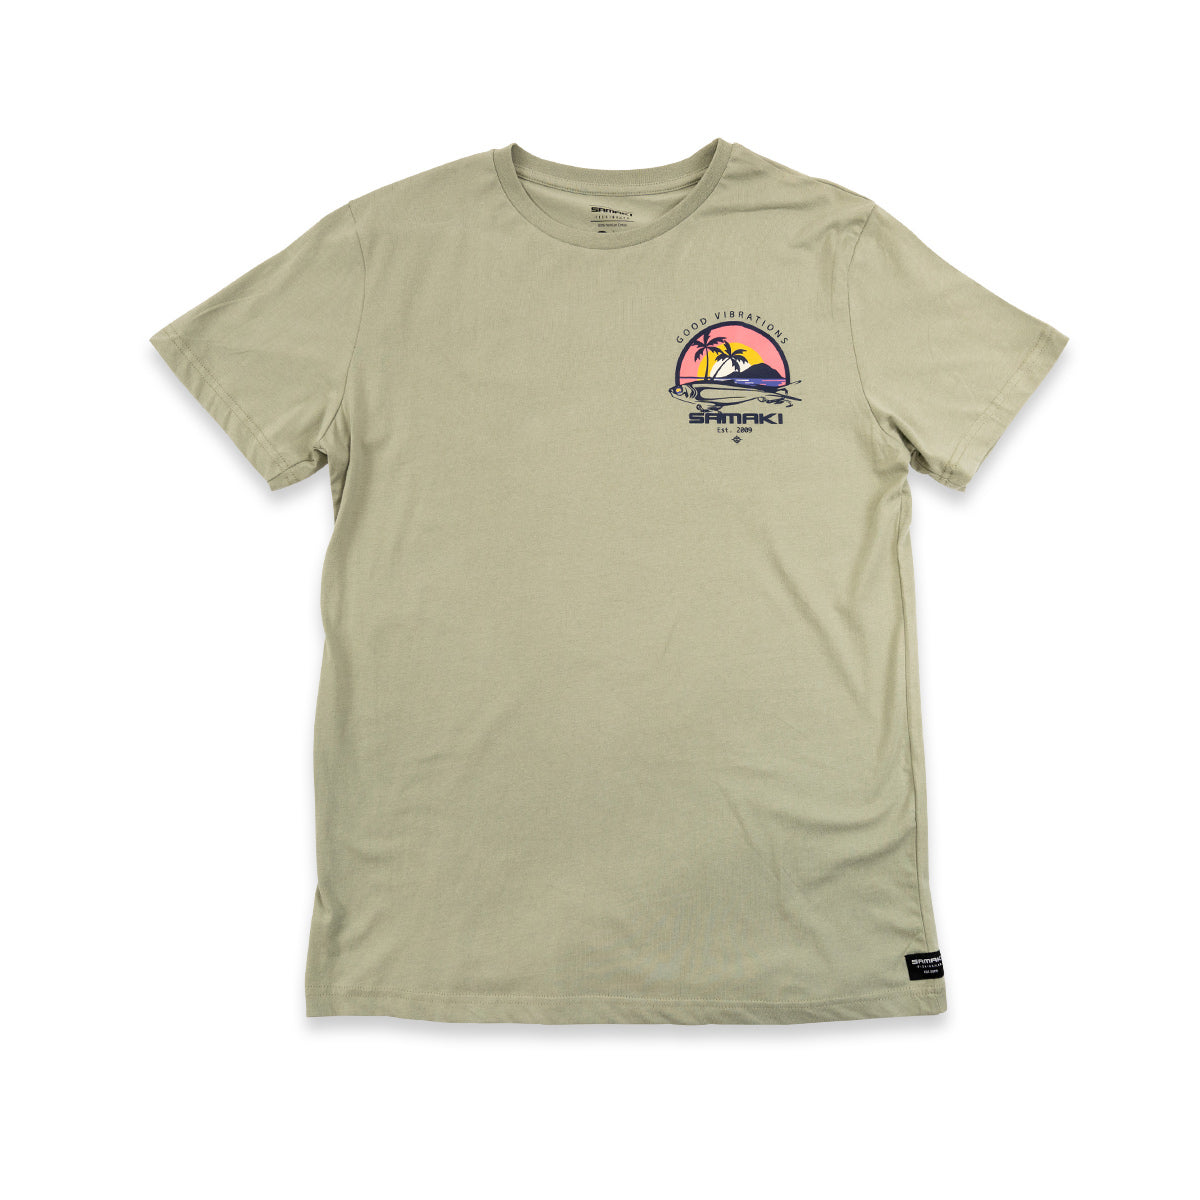 Performance Shirts - Samaki Australia, fishing performance shirt 